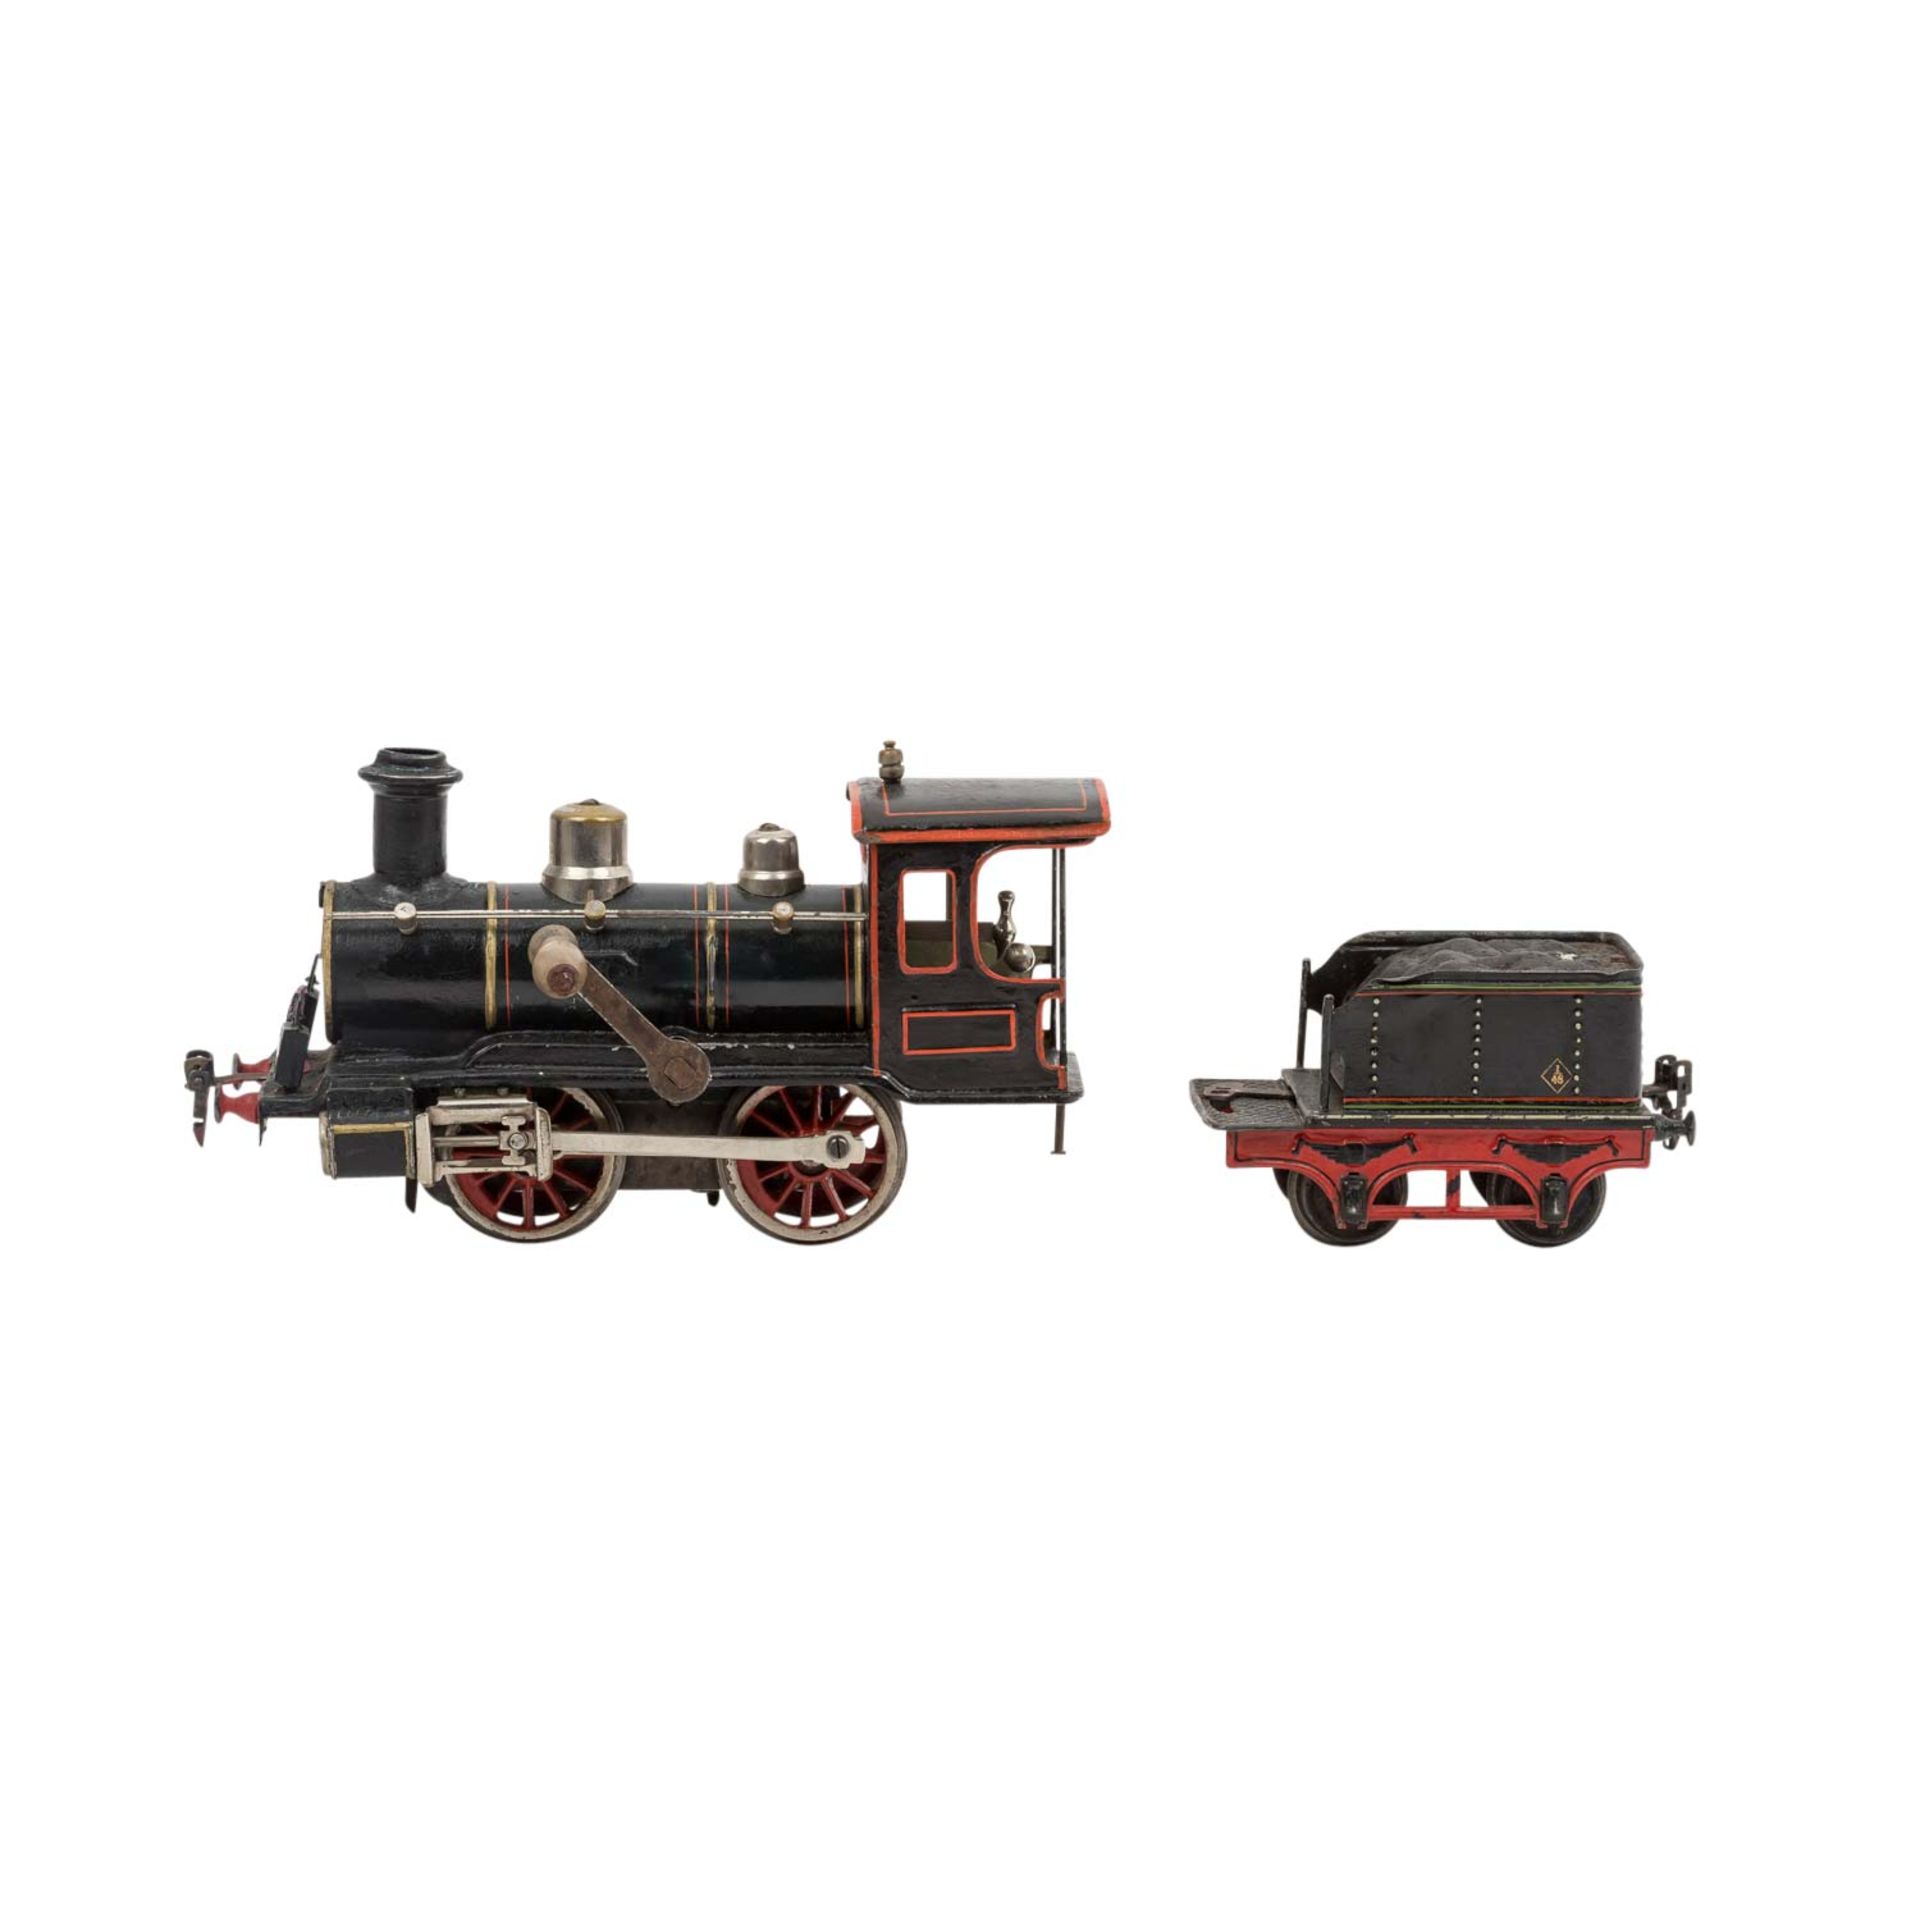 MÄRKLIN Uhrwerk-Dampflokomotive, 1904-05, Spur 1, - Image 3 of 9